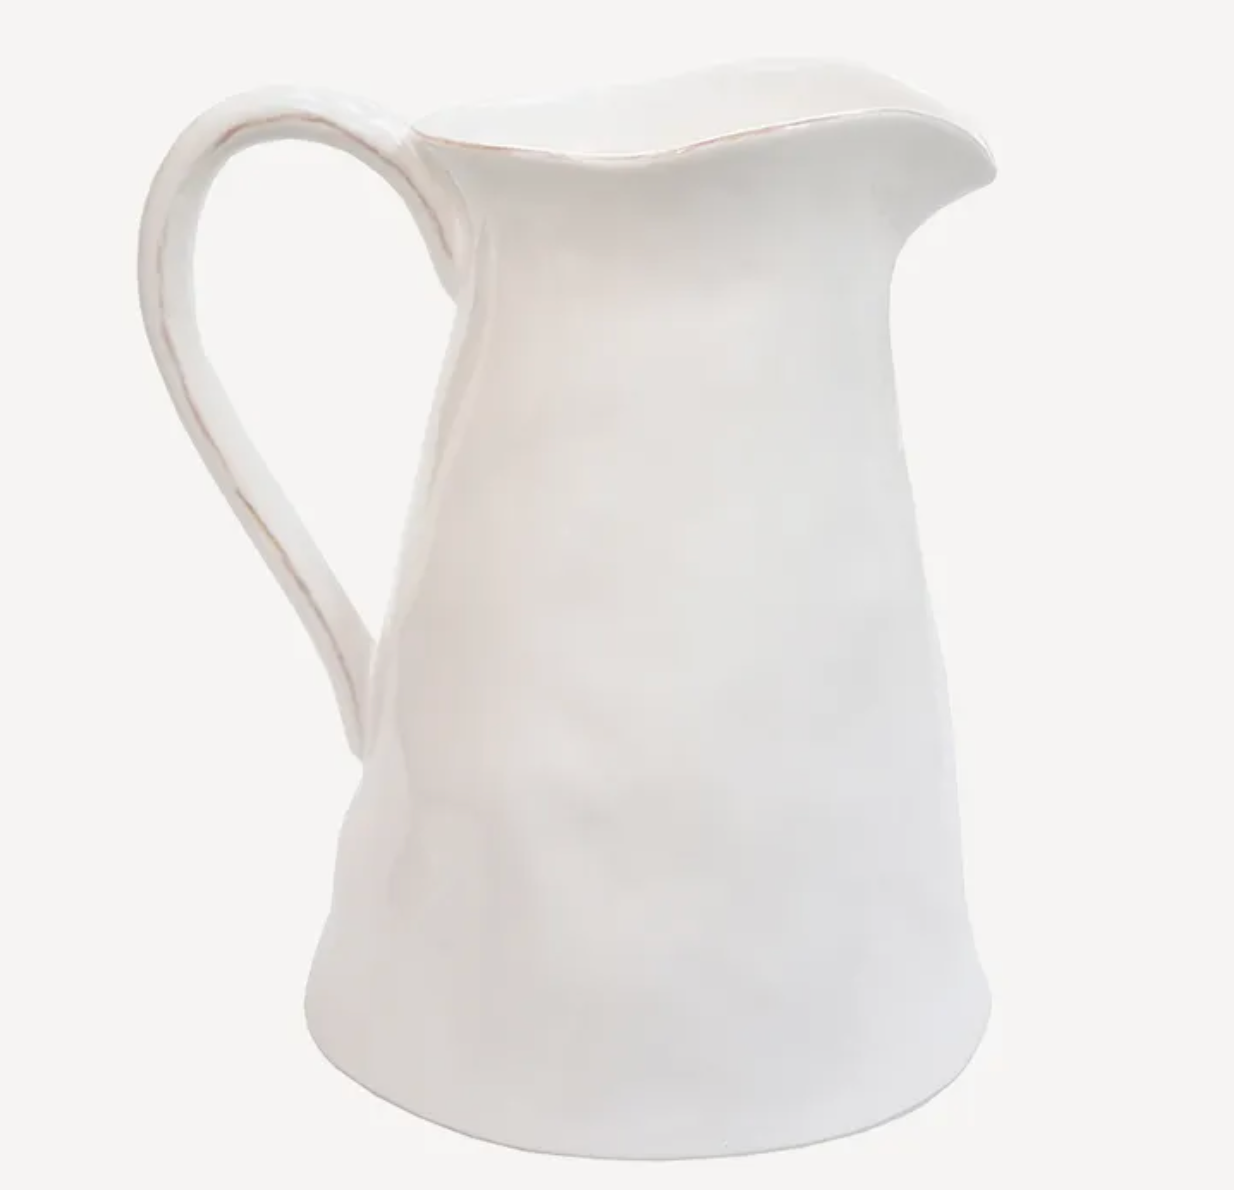 Primitif Large white pitcher